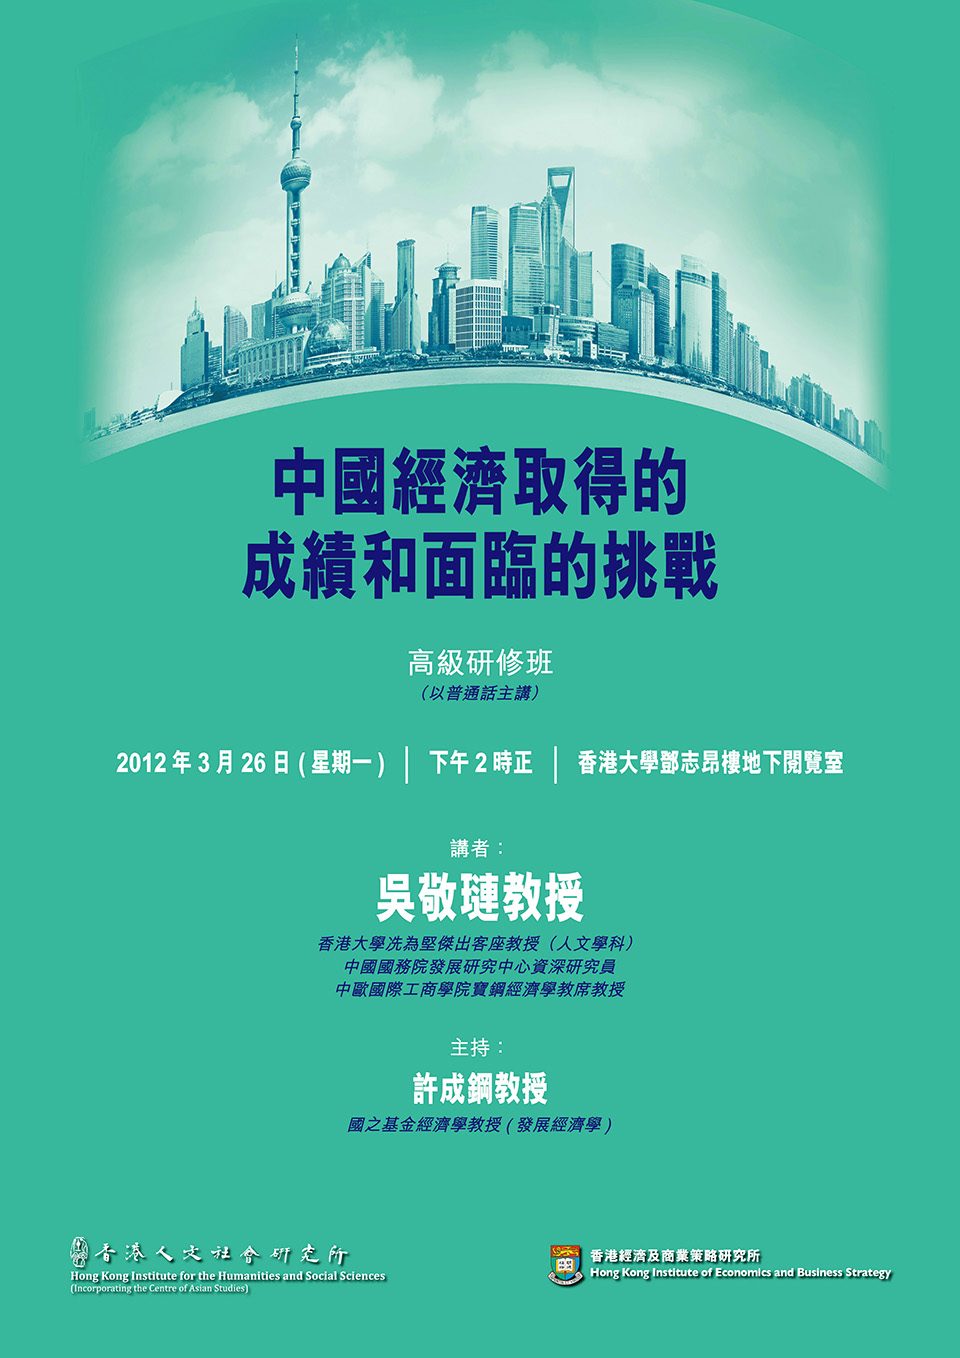 Advanced Graduate Seminar: “Achievements of Economic Development in China and Challenges Ahead” (中國經濟取得的成績和面臨的挑戰) by Professor Jinglian Wu (March 26, 2012)